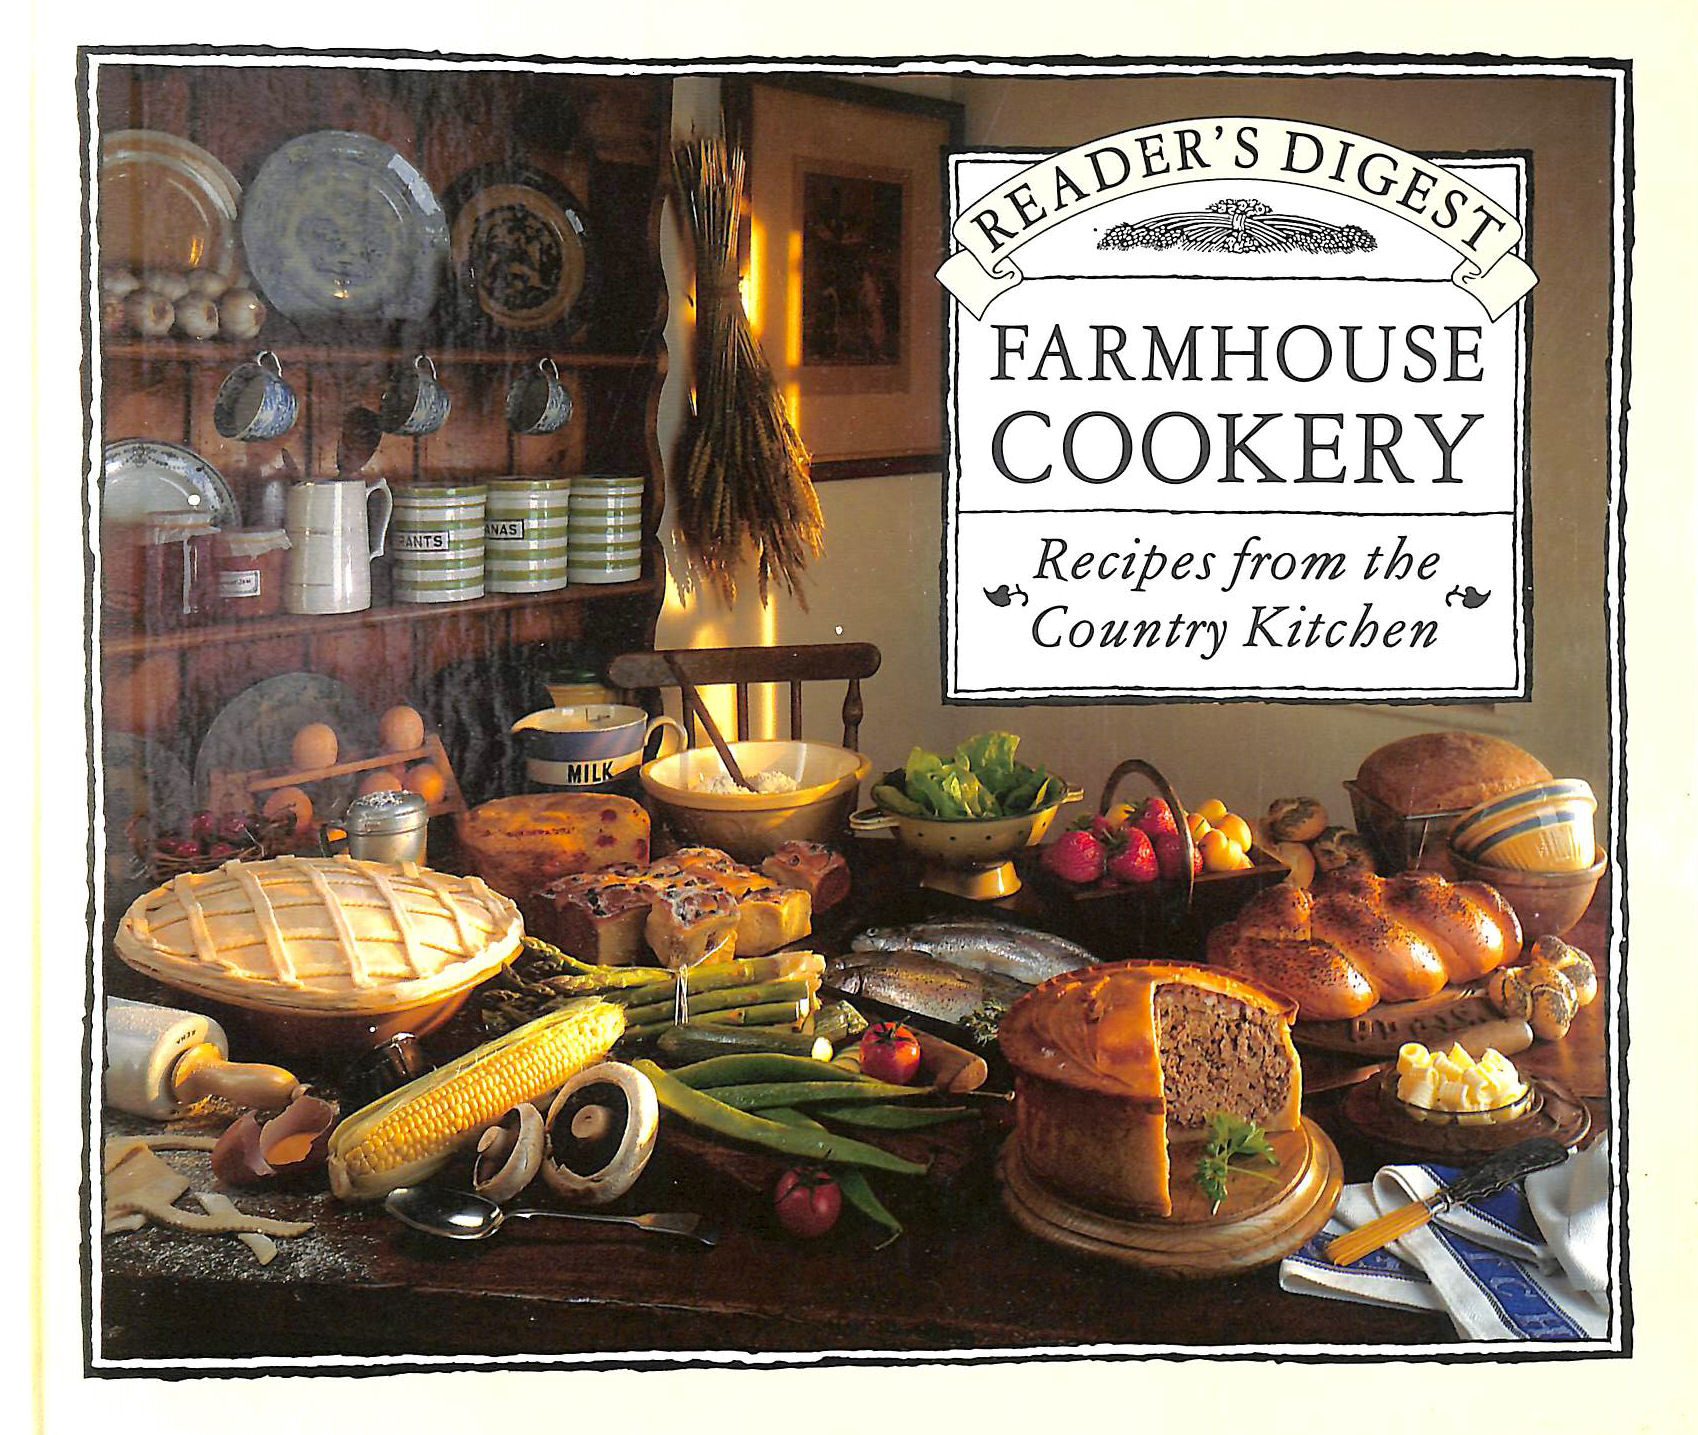 READER'S DIGEST ASSOCIATION - Farmhouse Cookery